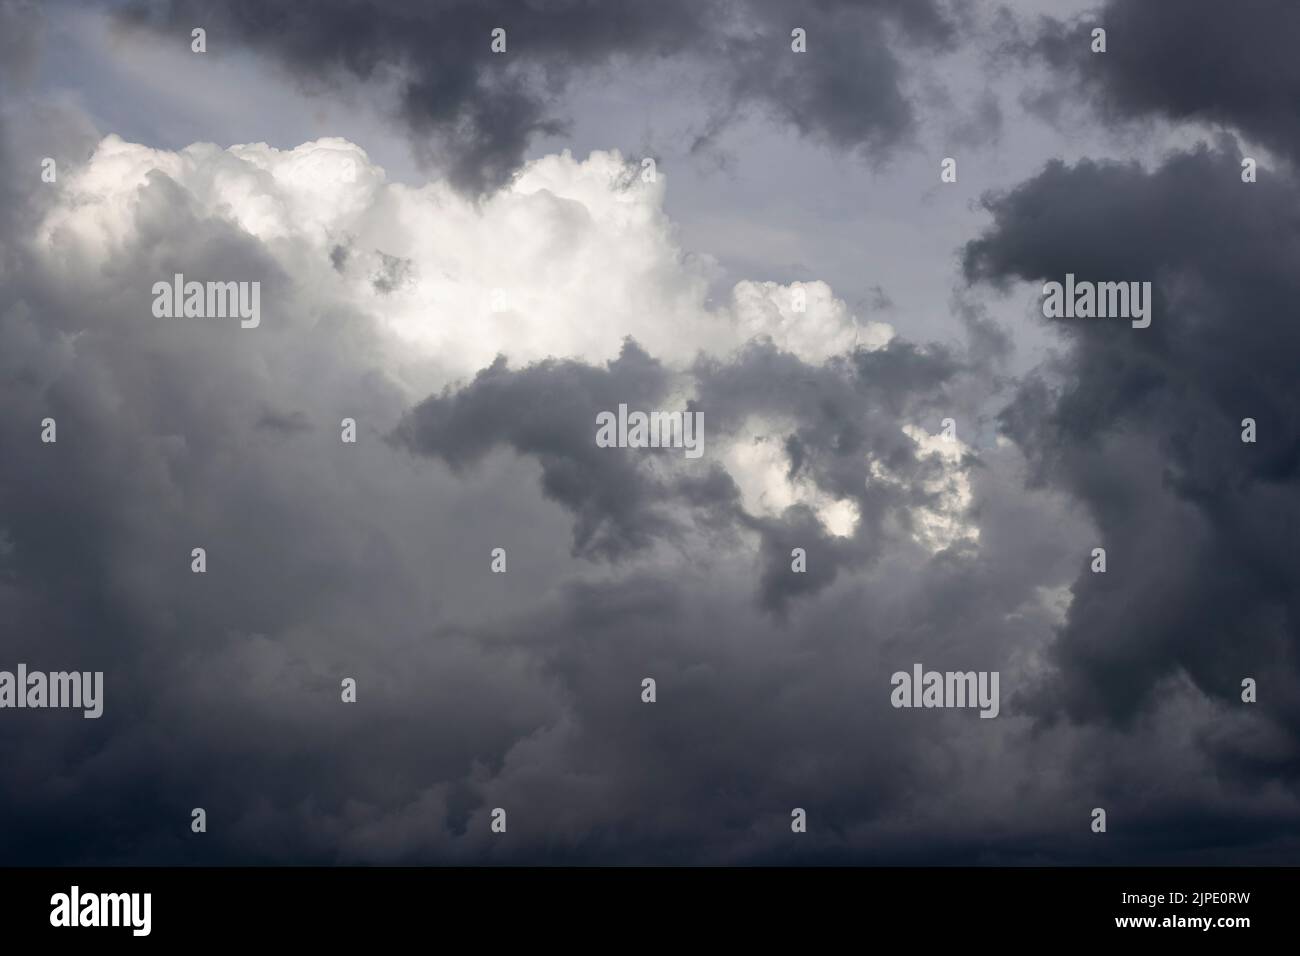 Oscuras nubes de tormenta llenan el cielo en la zona rural de Tennessee Foto de stock